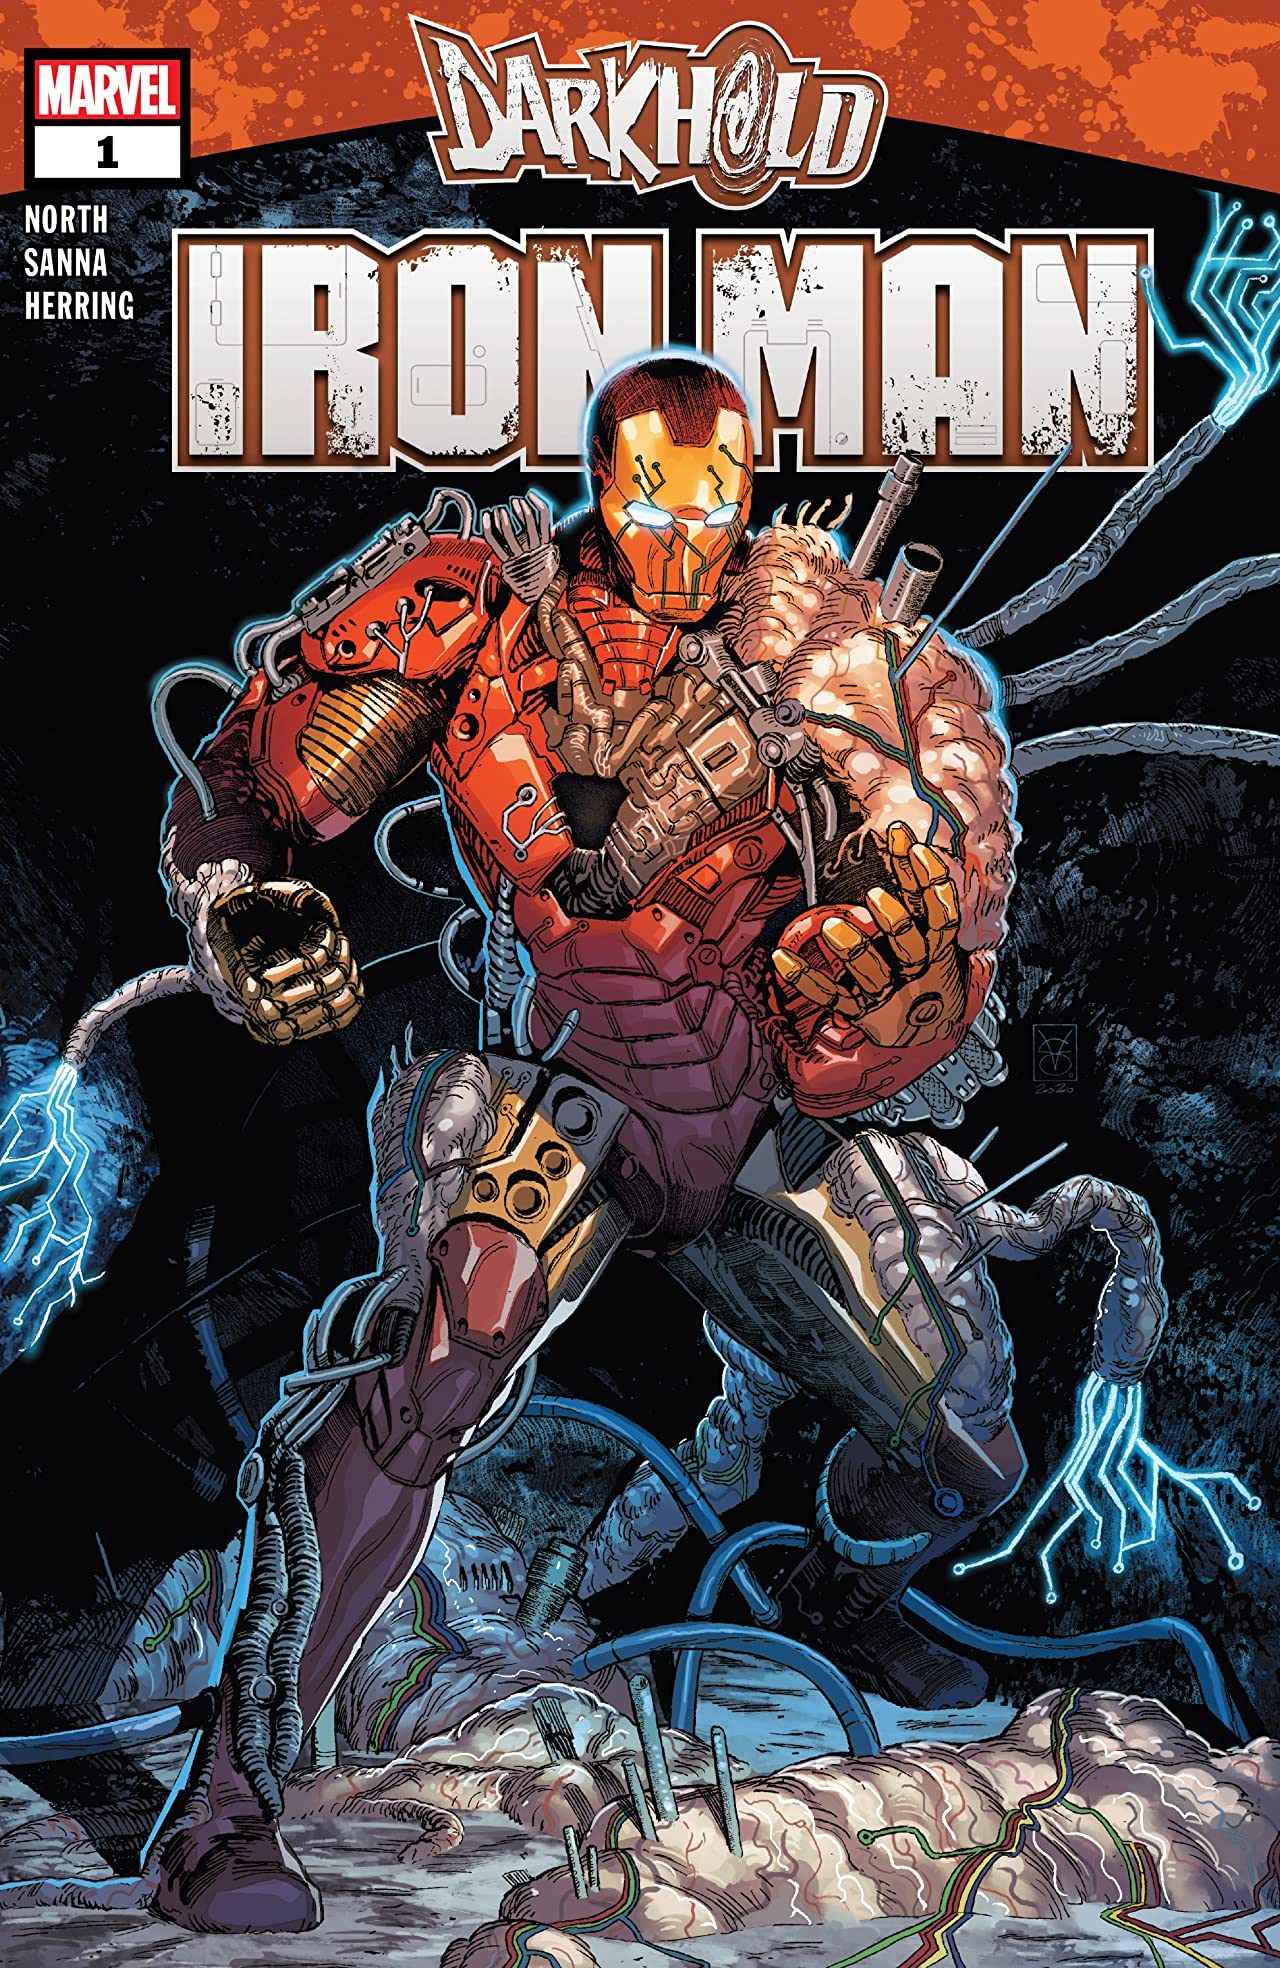 Tony Stark on the cover of Darkhold Iron Man 1 by Valerio Giangiordano